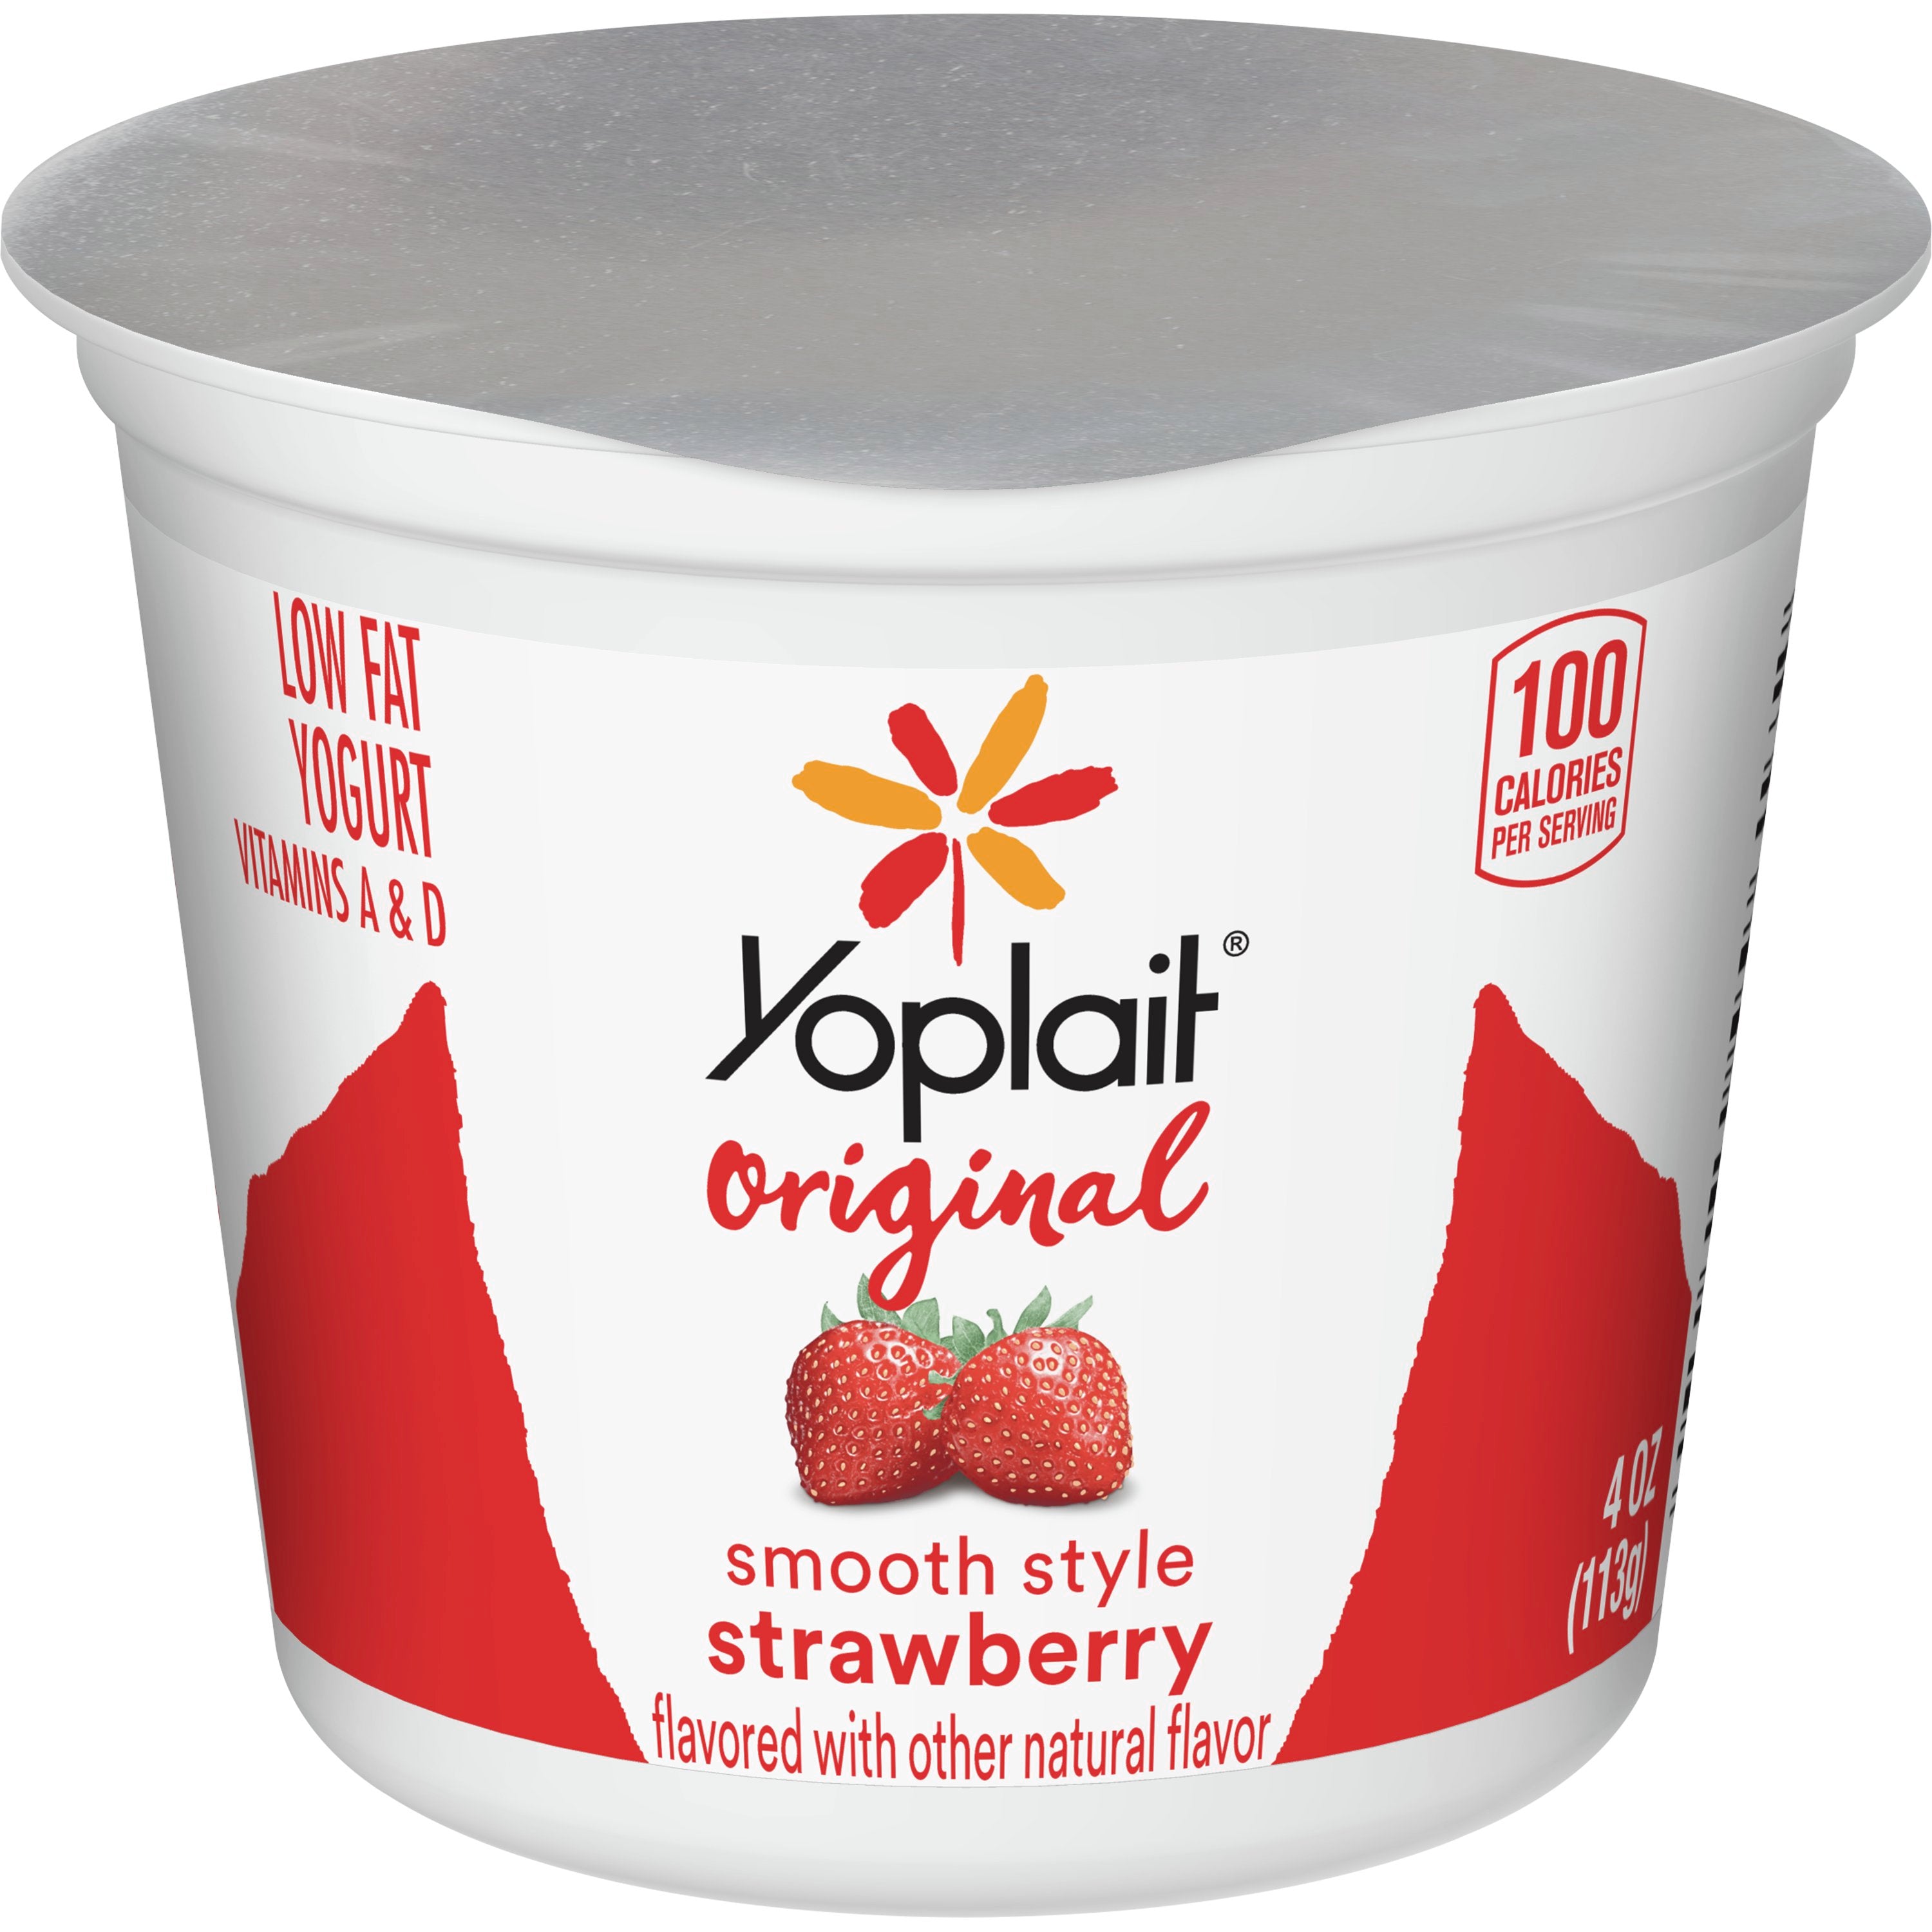 General Mills introduces new Yoplait yogurt brand in glass jars